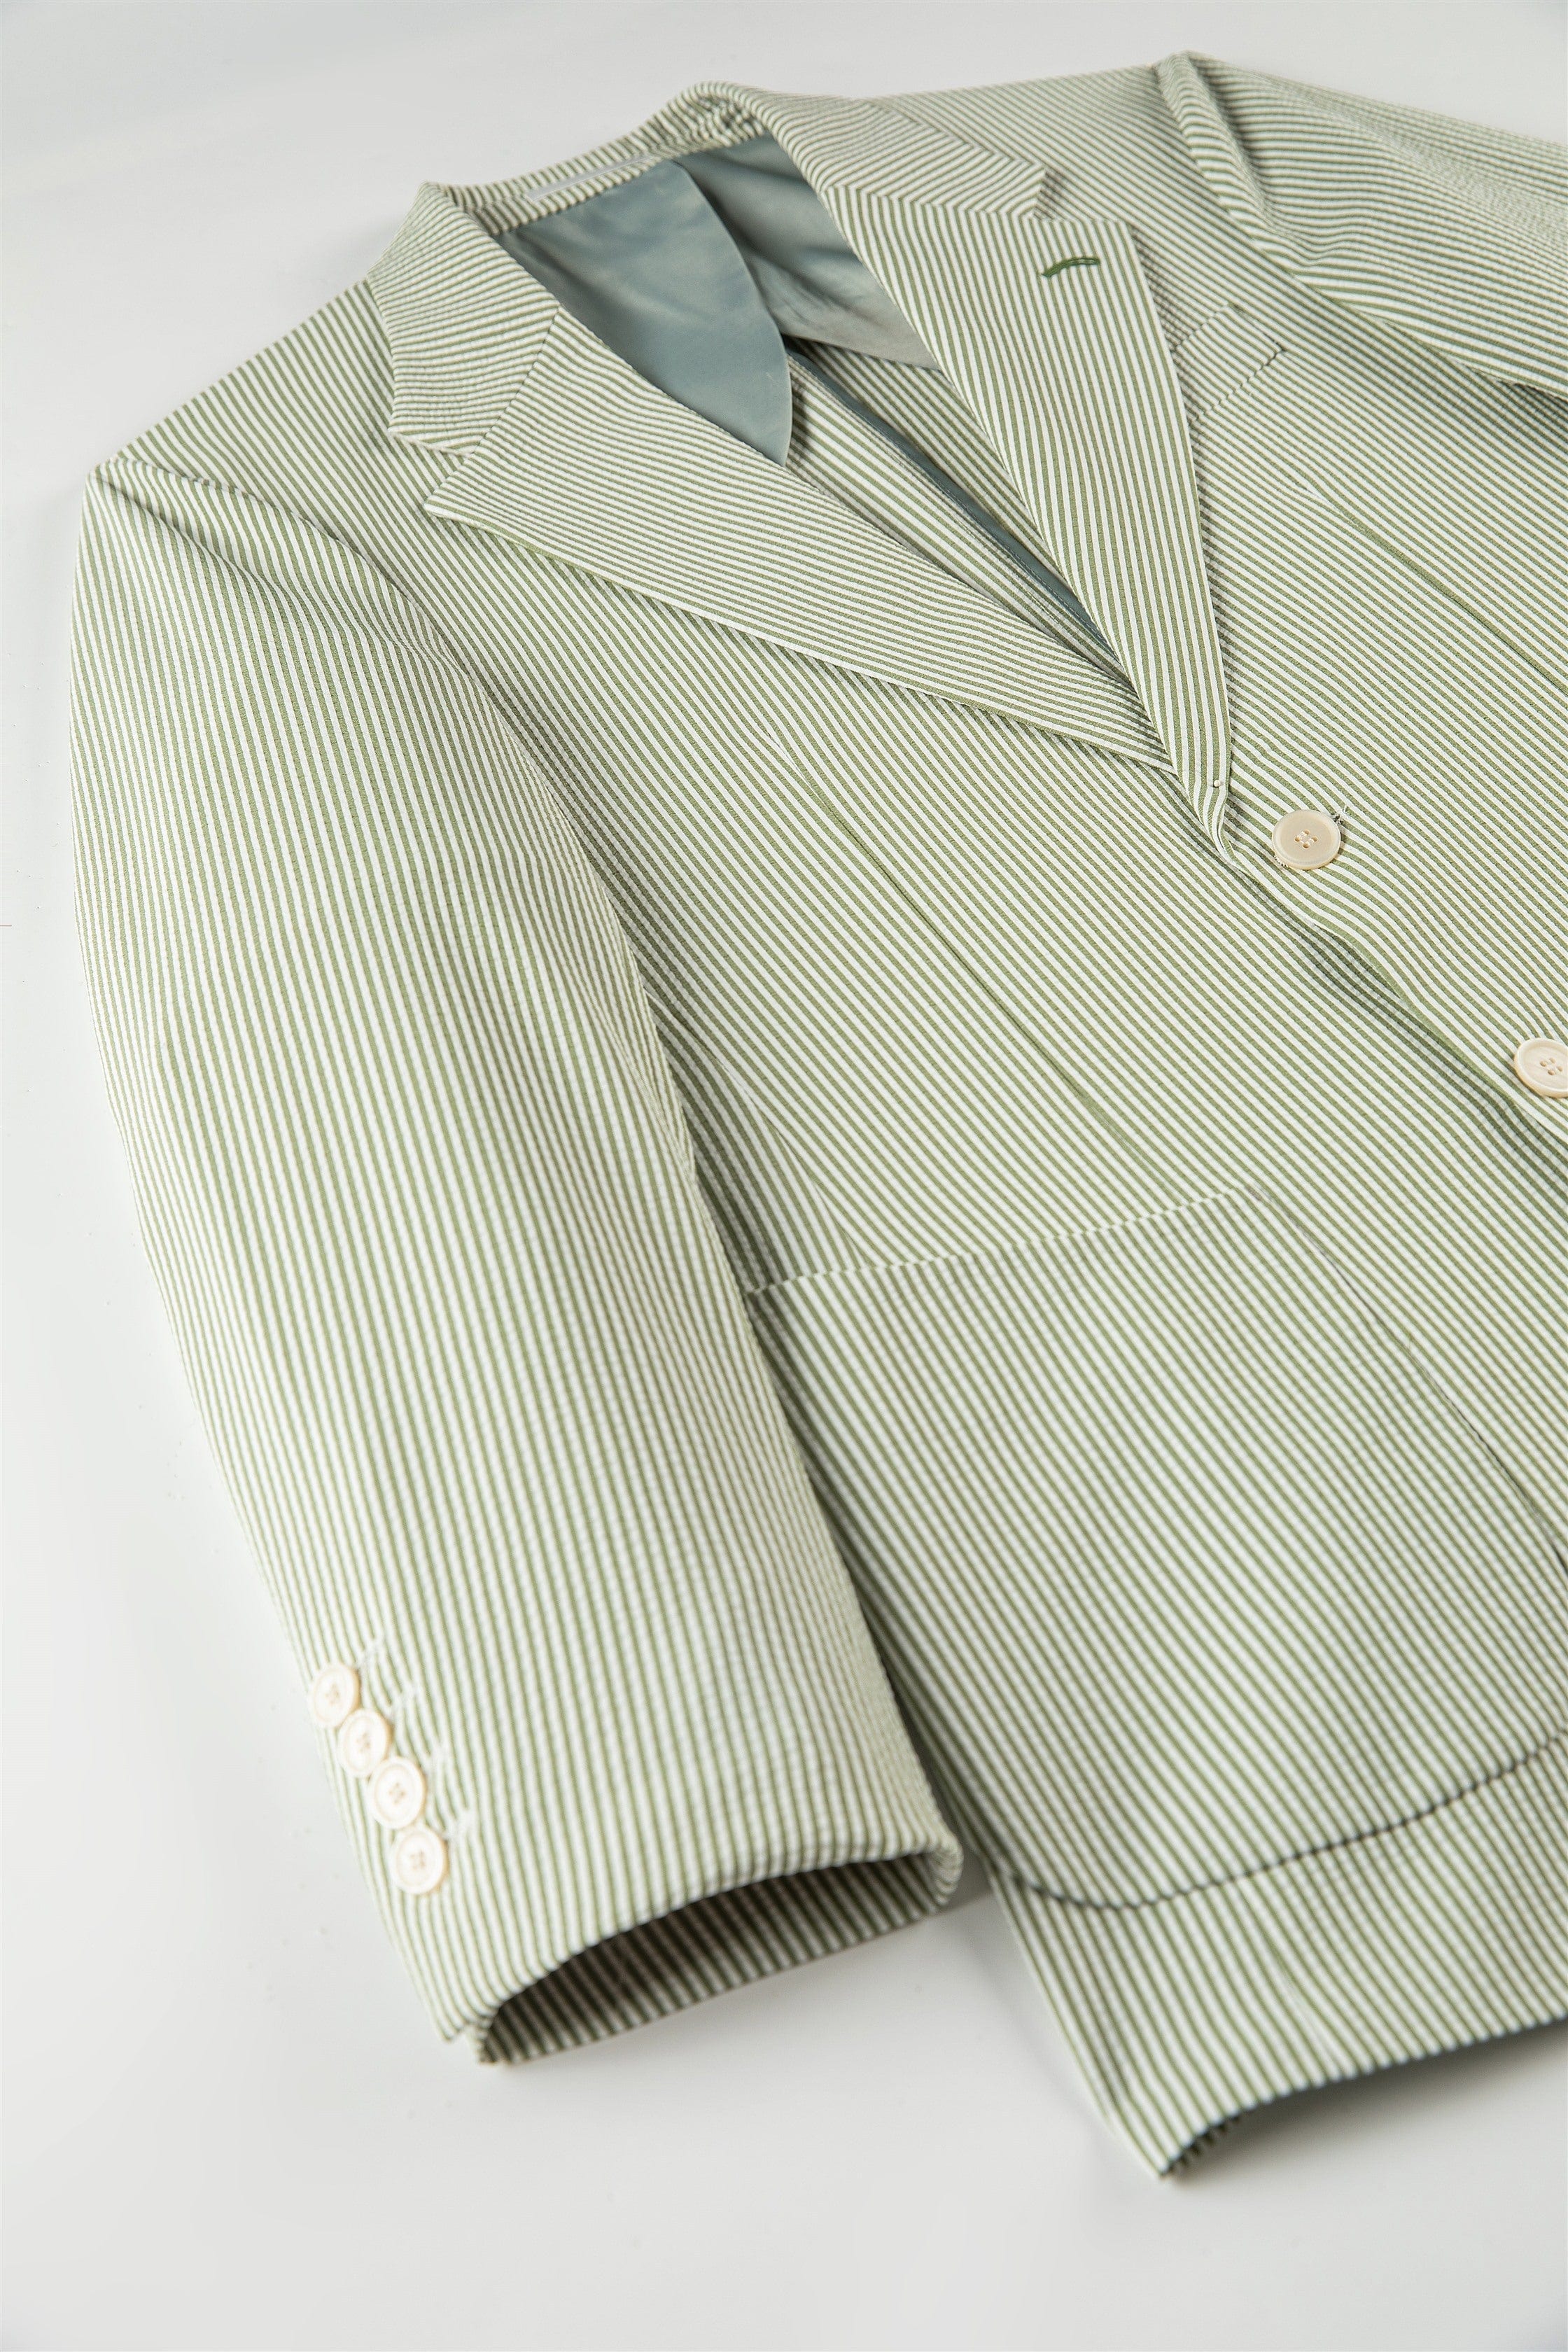 ceehuteey Men's Formal  Striped 2 Pieces Notch Lapel Bussiness  Suit Tuxedos (Blazer+Pants)